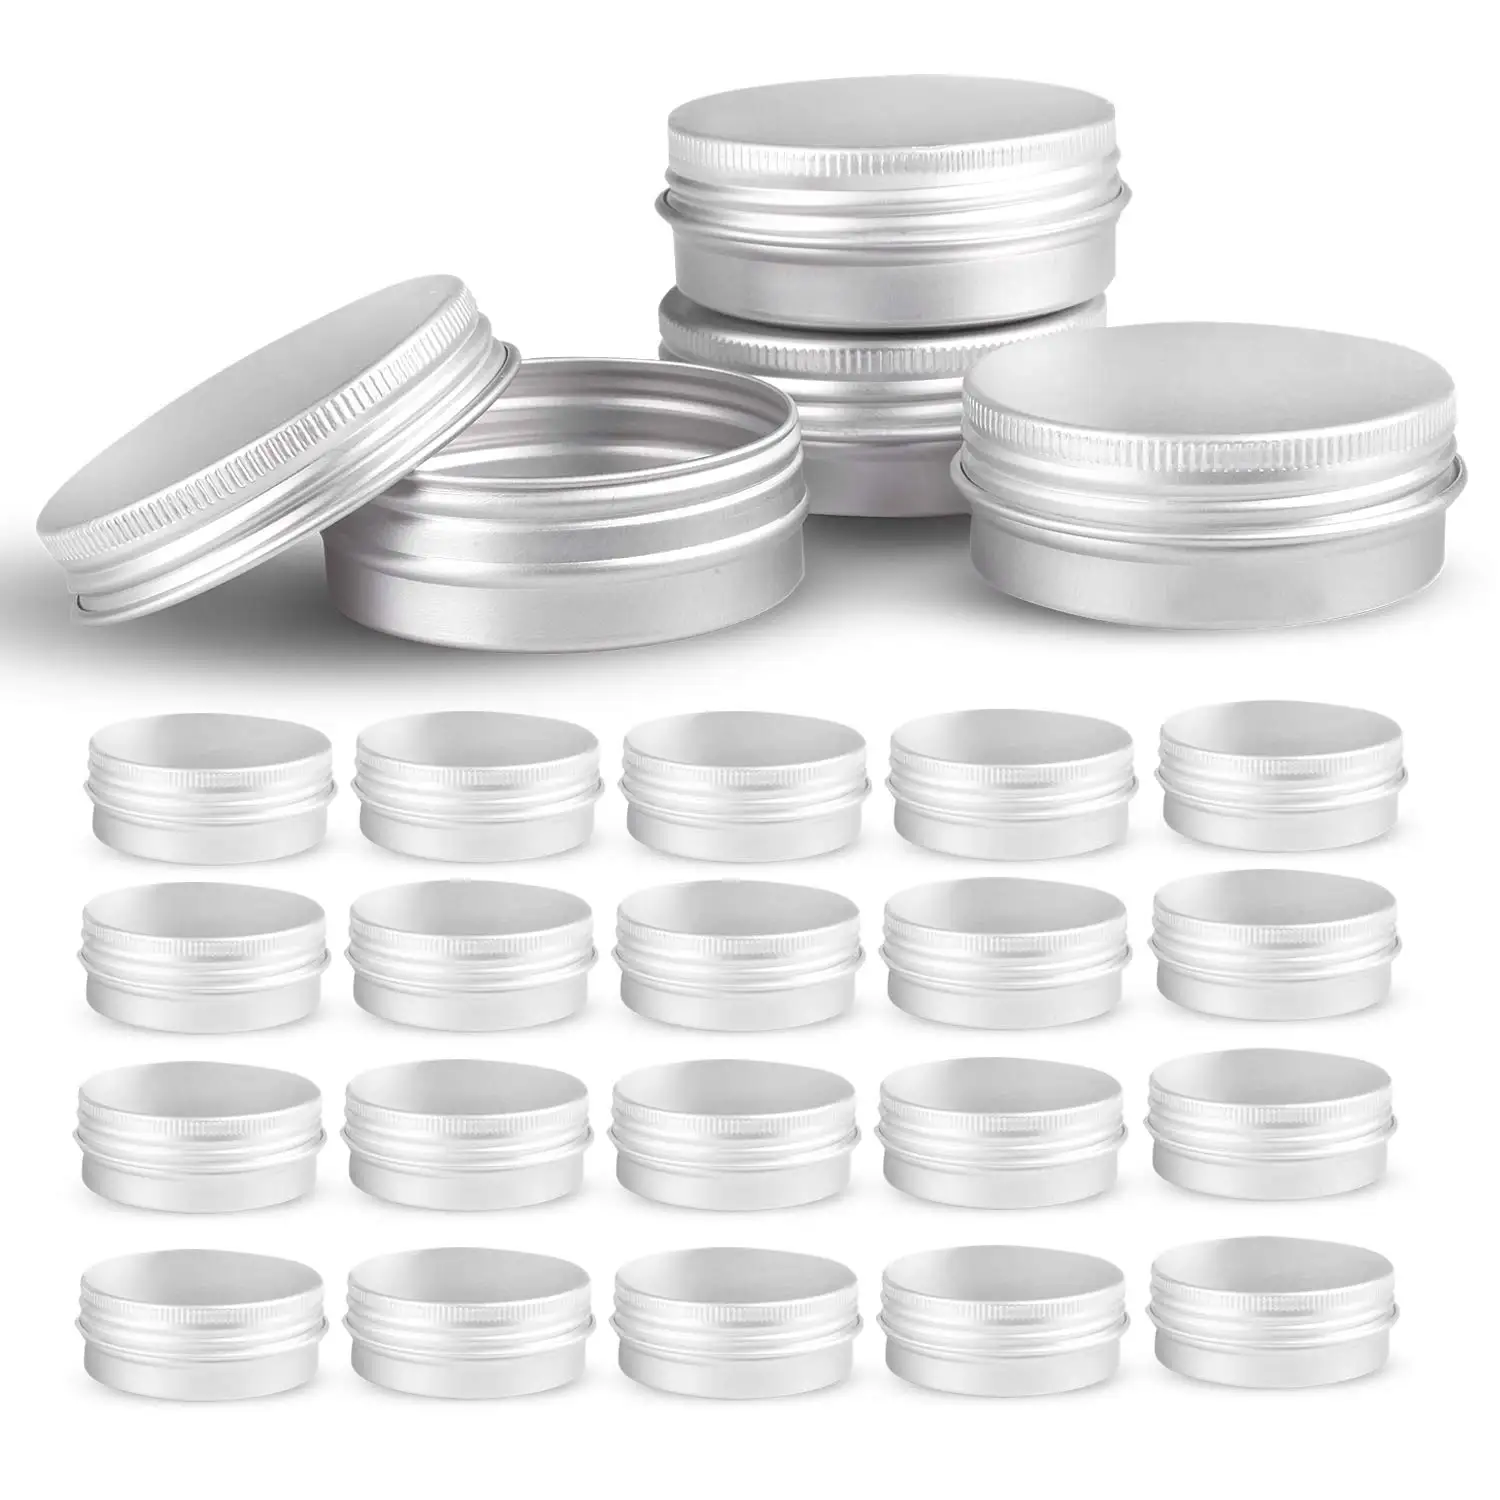 

Aluminum Tin Jars,32 Pcs 5ml 10ml 15ml Round Cosmetic Sample Metal Tins Storage Jar Containers for Lip Balm Candles DIY Crafts